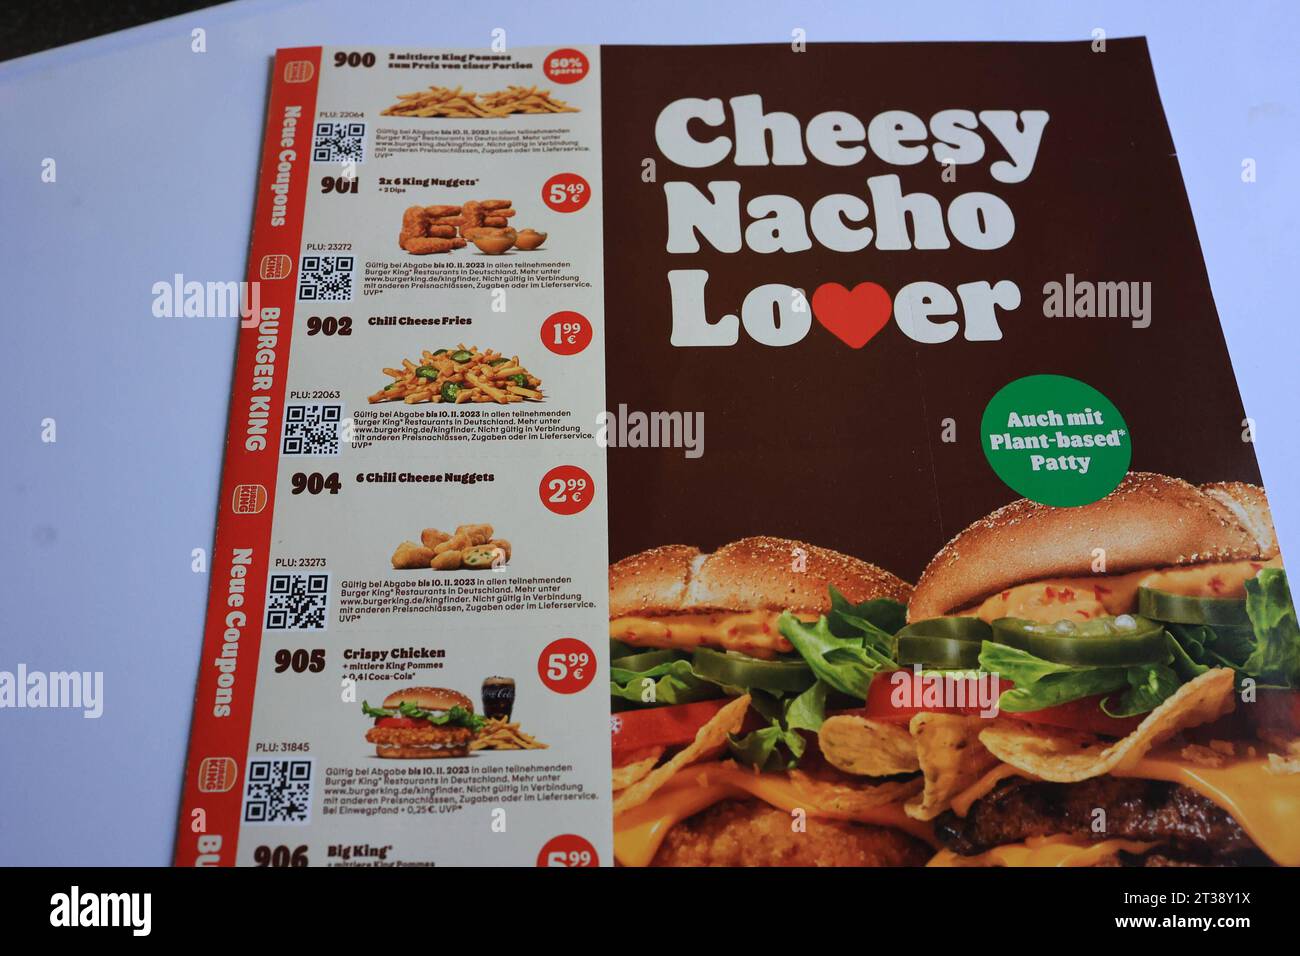 Burger king coupon hi-res stock photography and images - Alamy